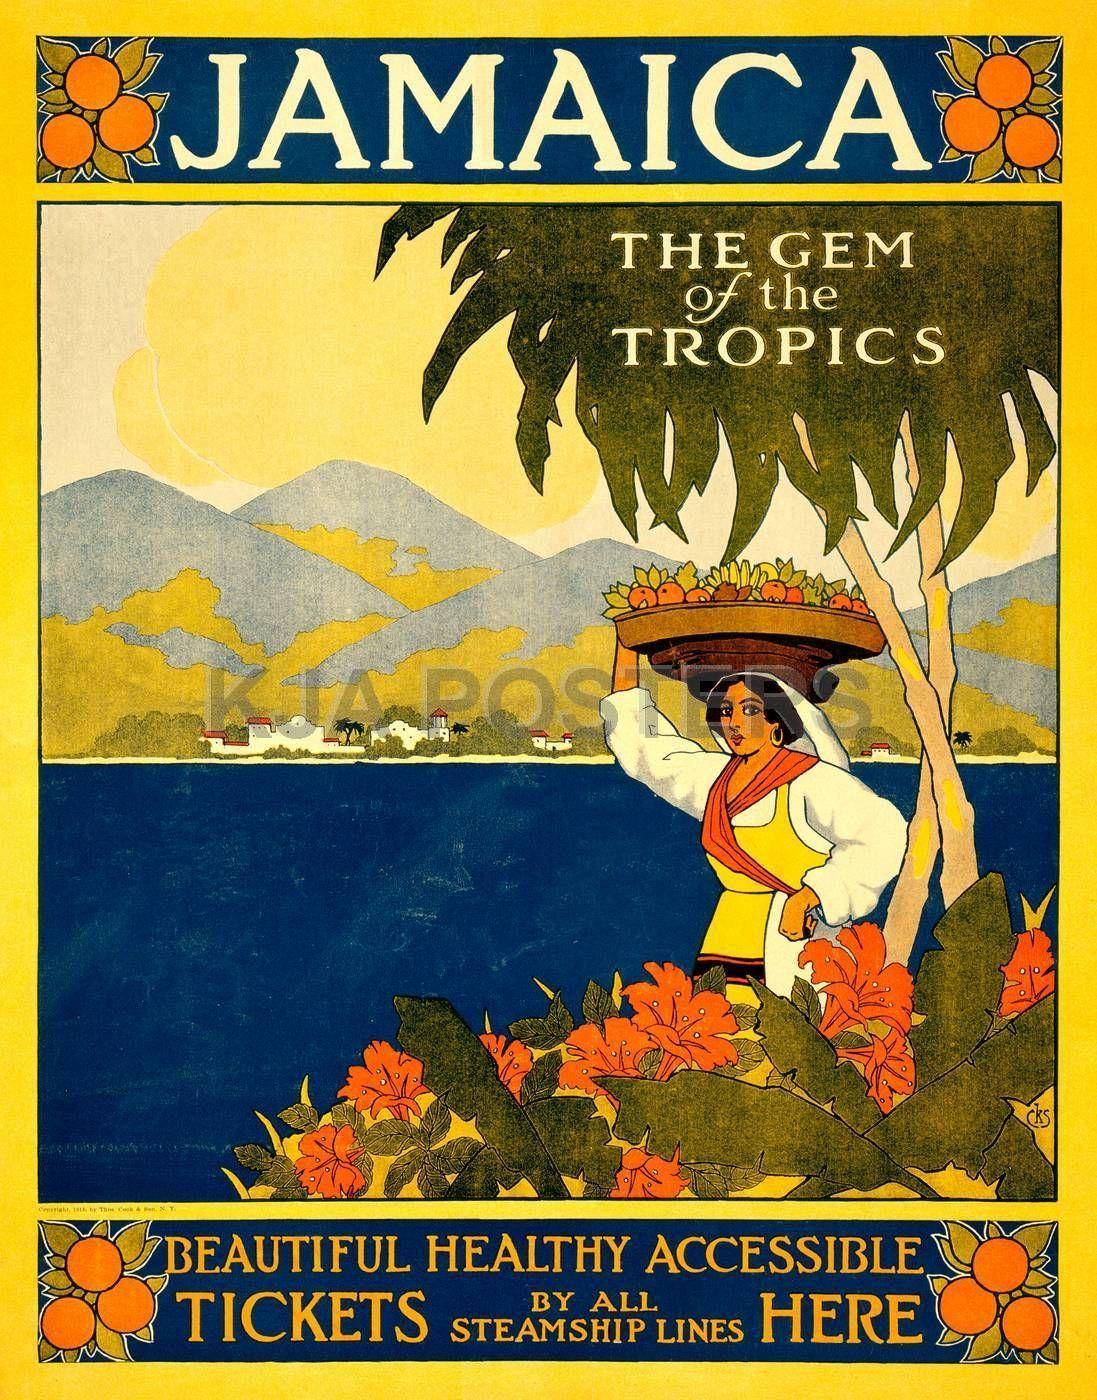 Vintage Travel Poster Wallpapers - Top Free Vintage Travel Poster